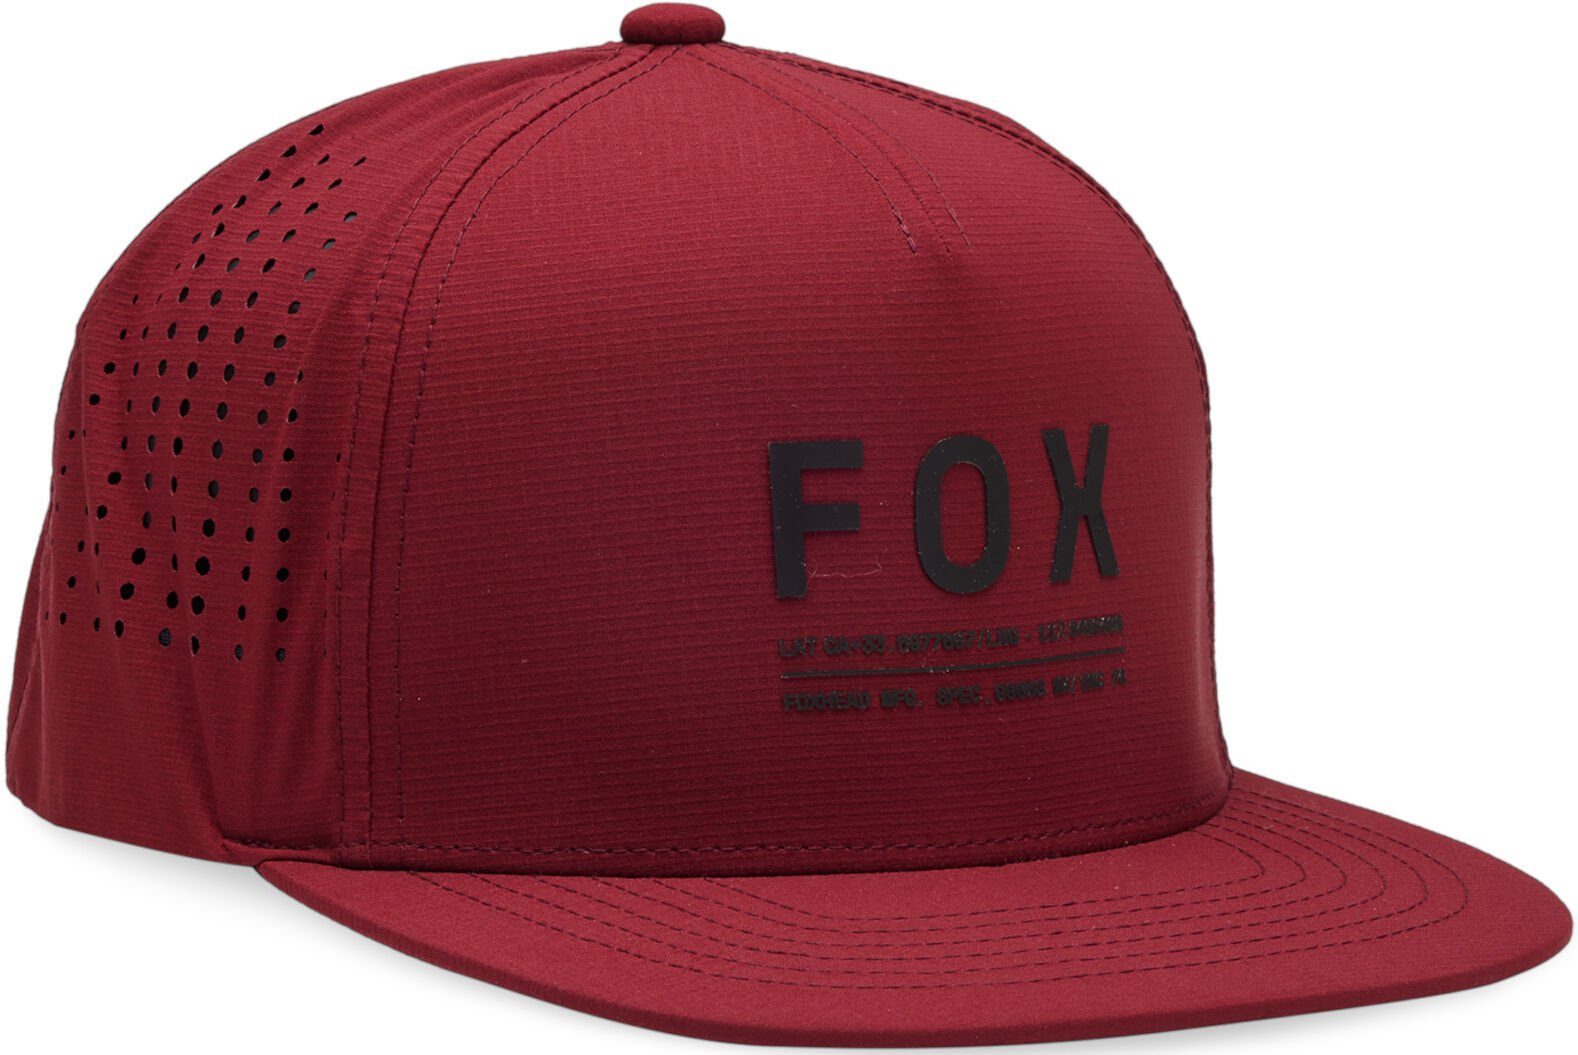 Fox Outdoorhut Non Stop Tech Snapback Kappe Red | Hüte